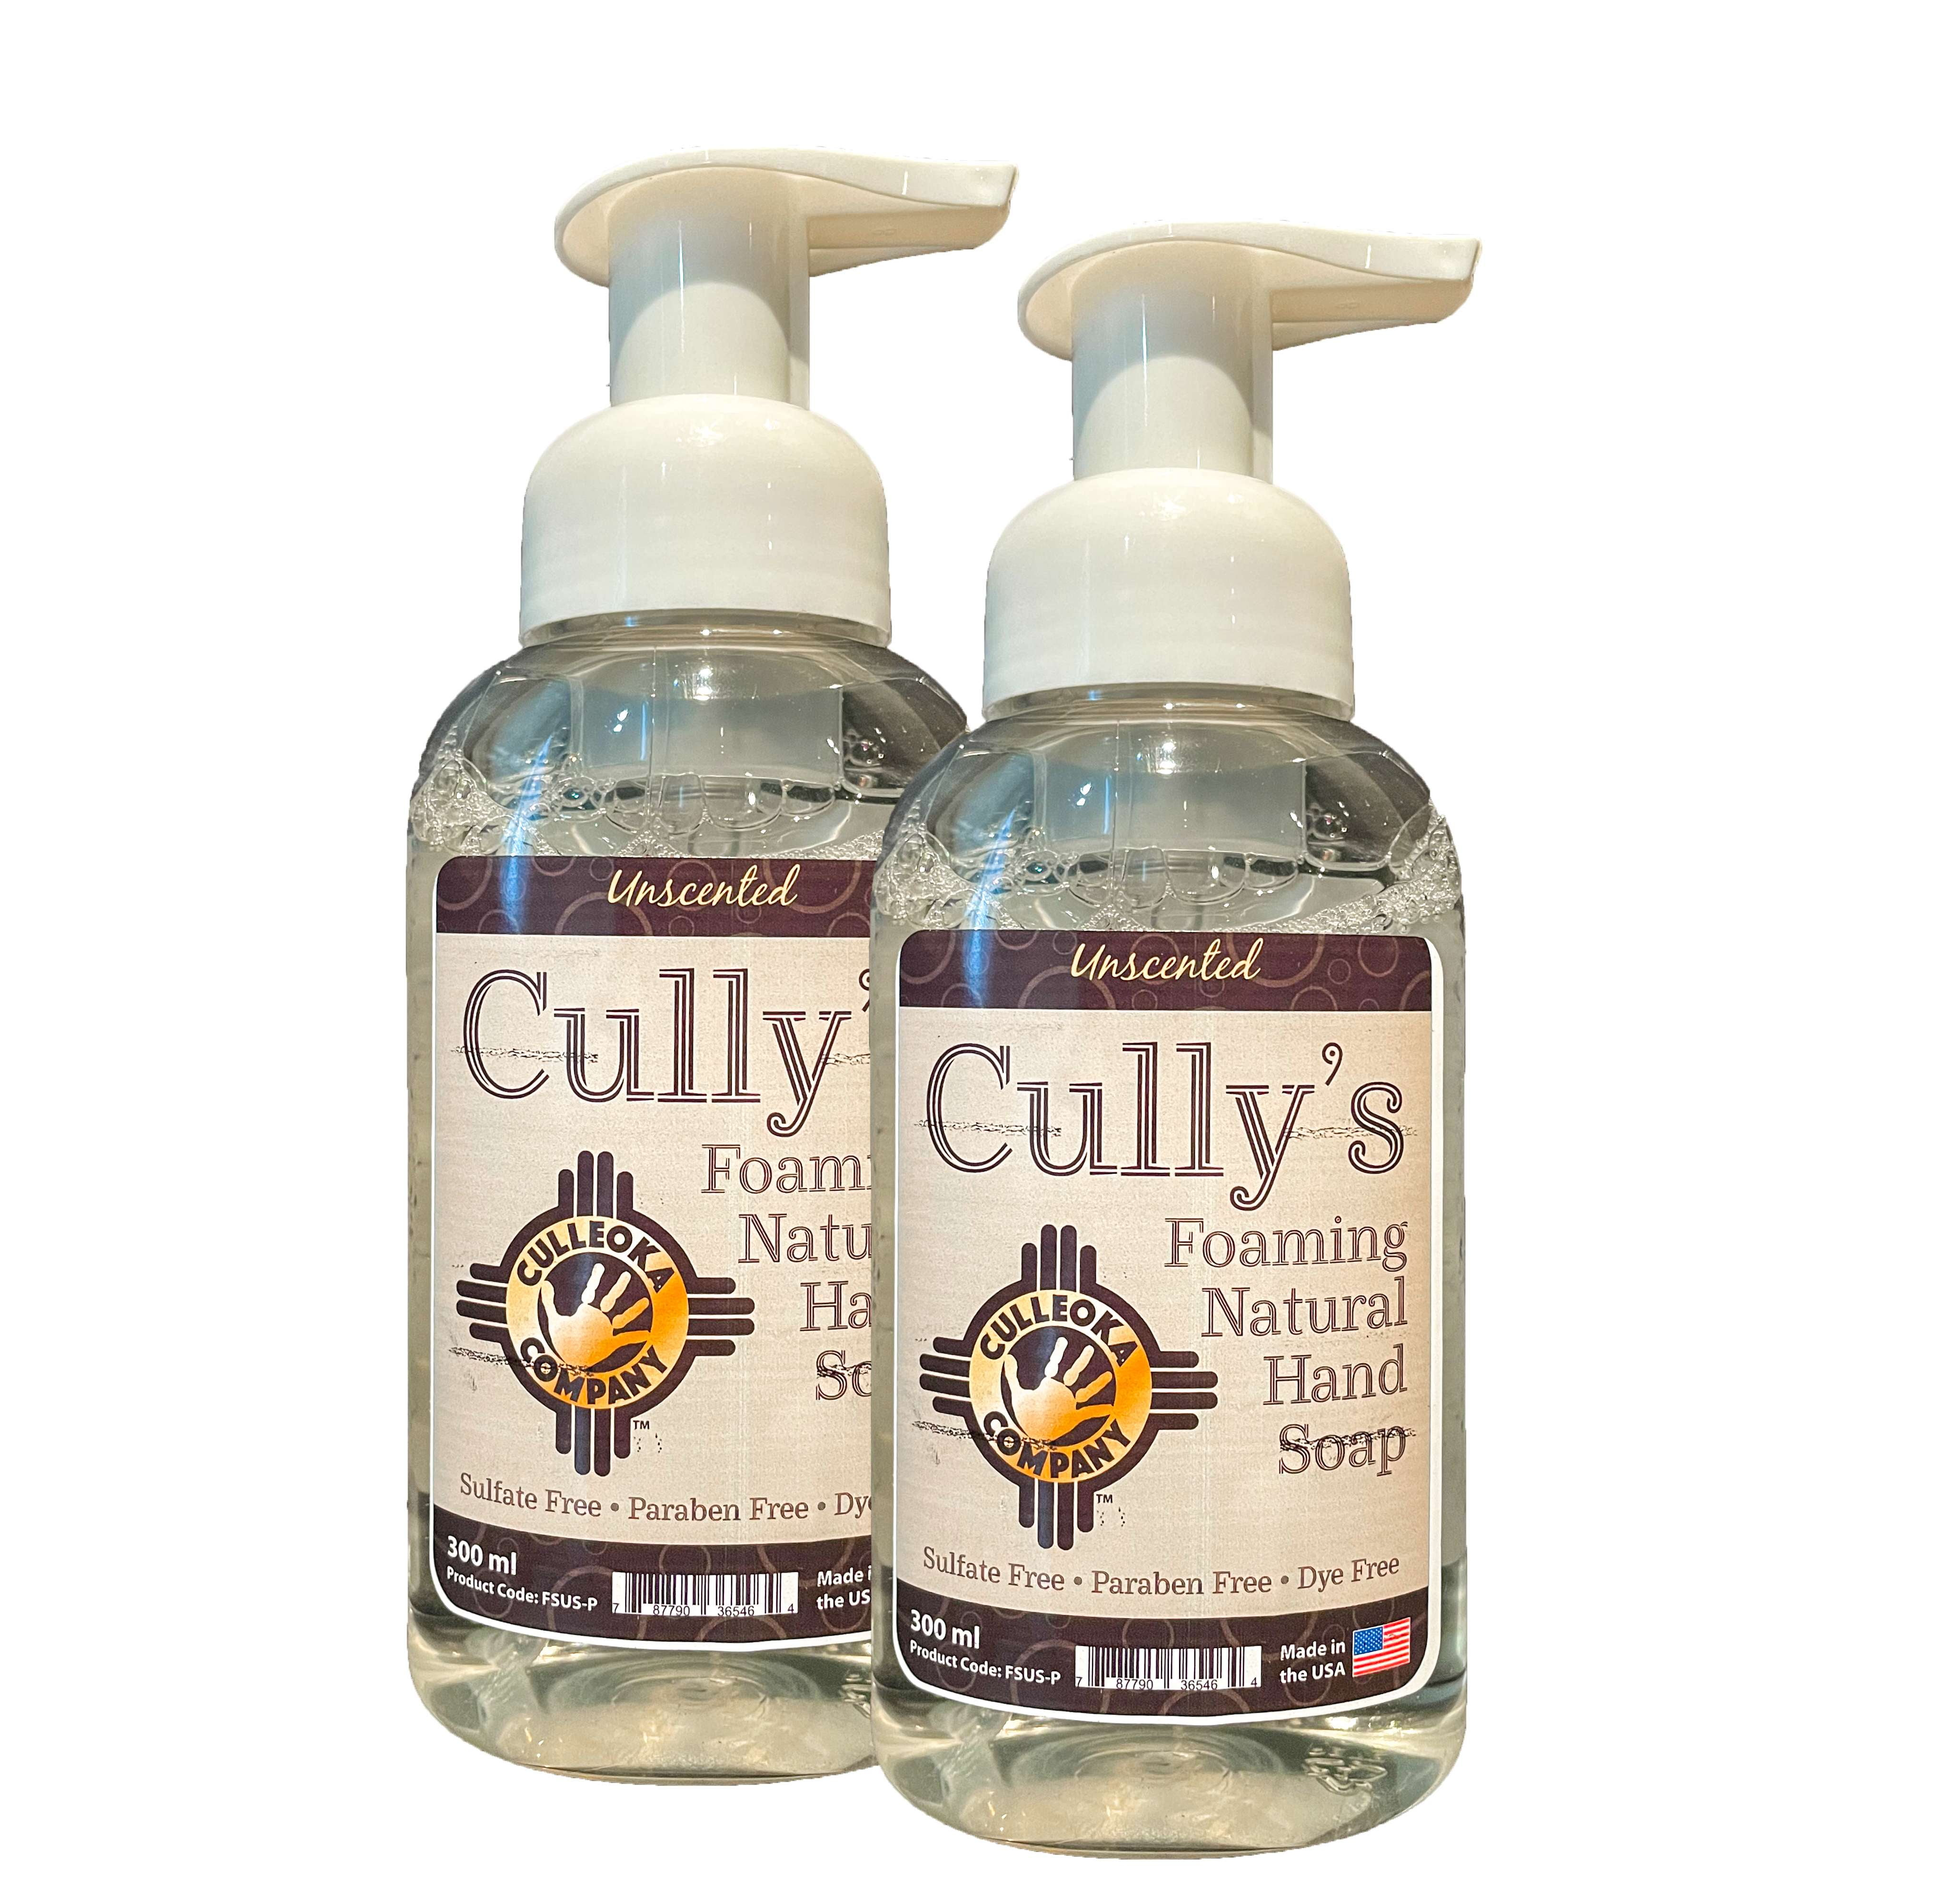 Cully's Foaming Natural Hand Soap - Culleoka Company LLC